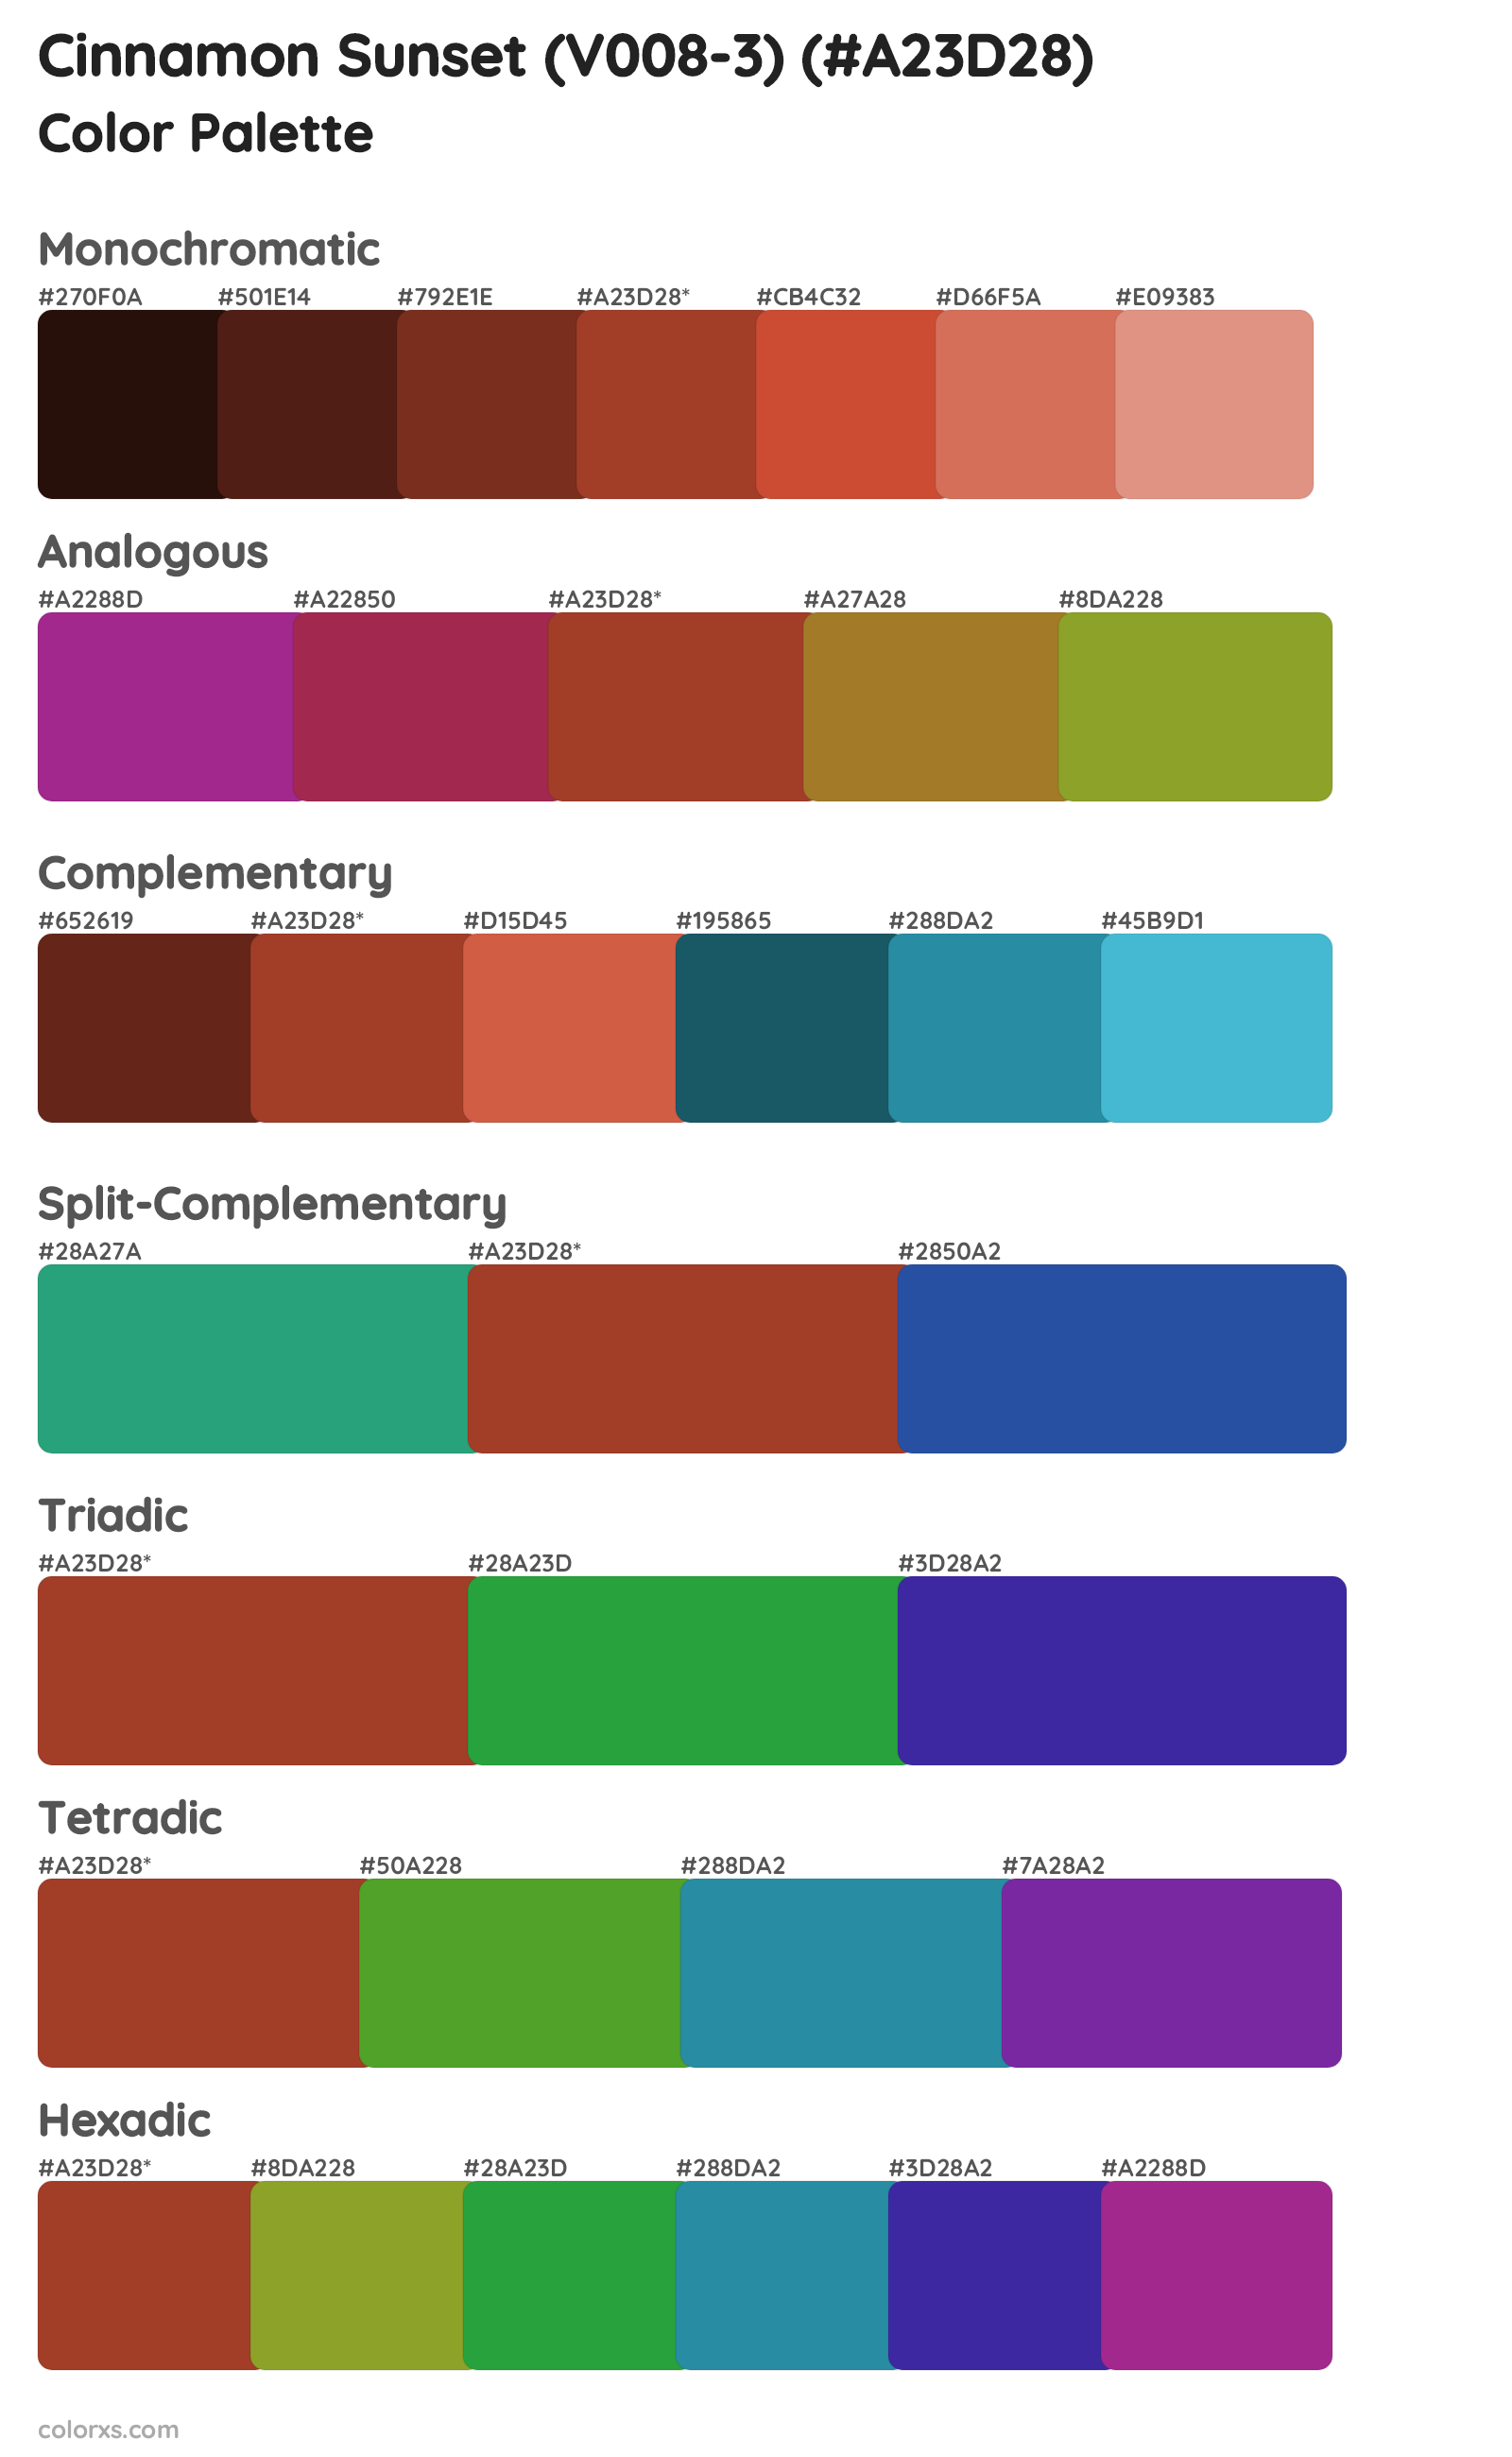 Cinnamon Sunset (V008-3) Color Scheme Palettes